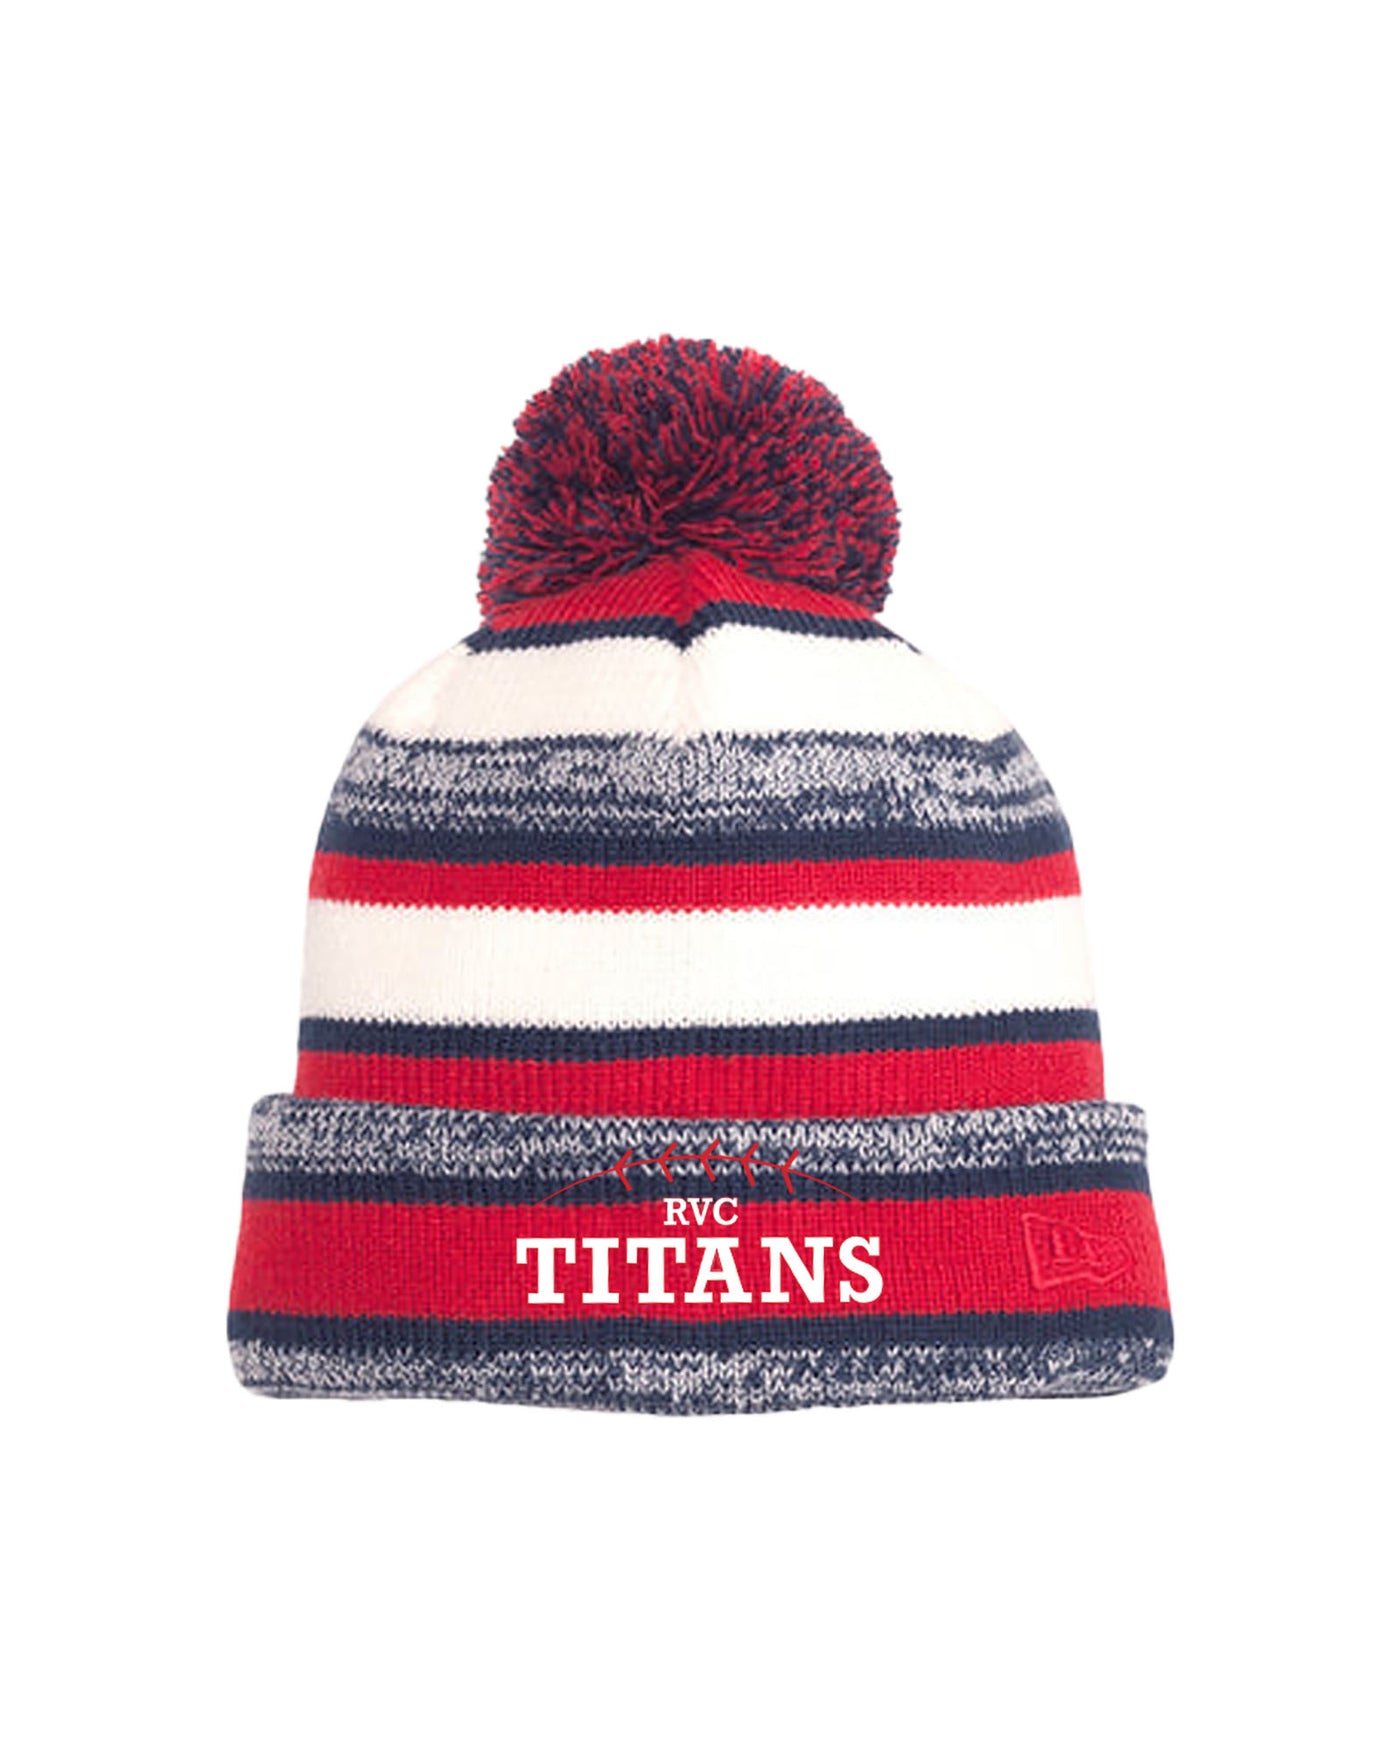 Titans Gameday Fleece Lined Winter Hat